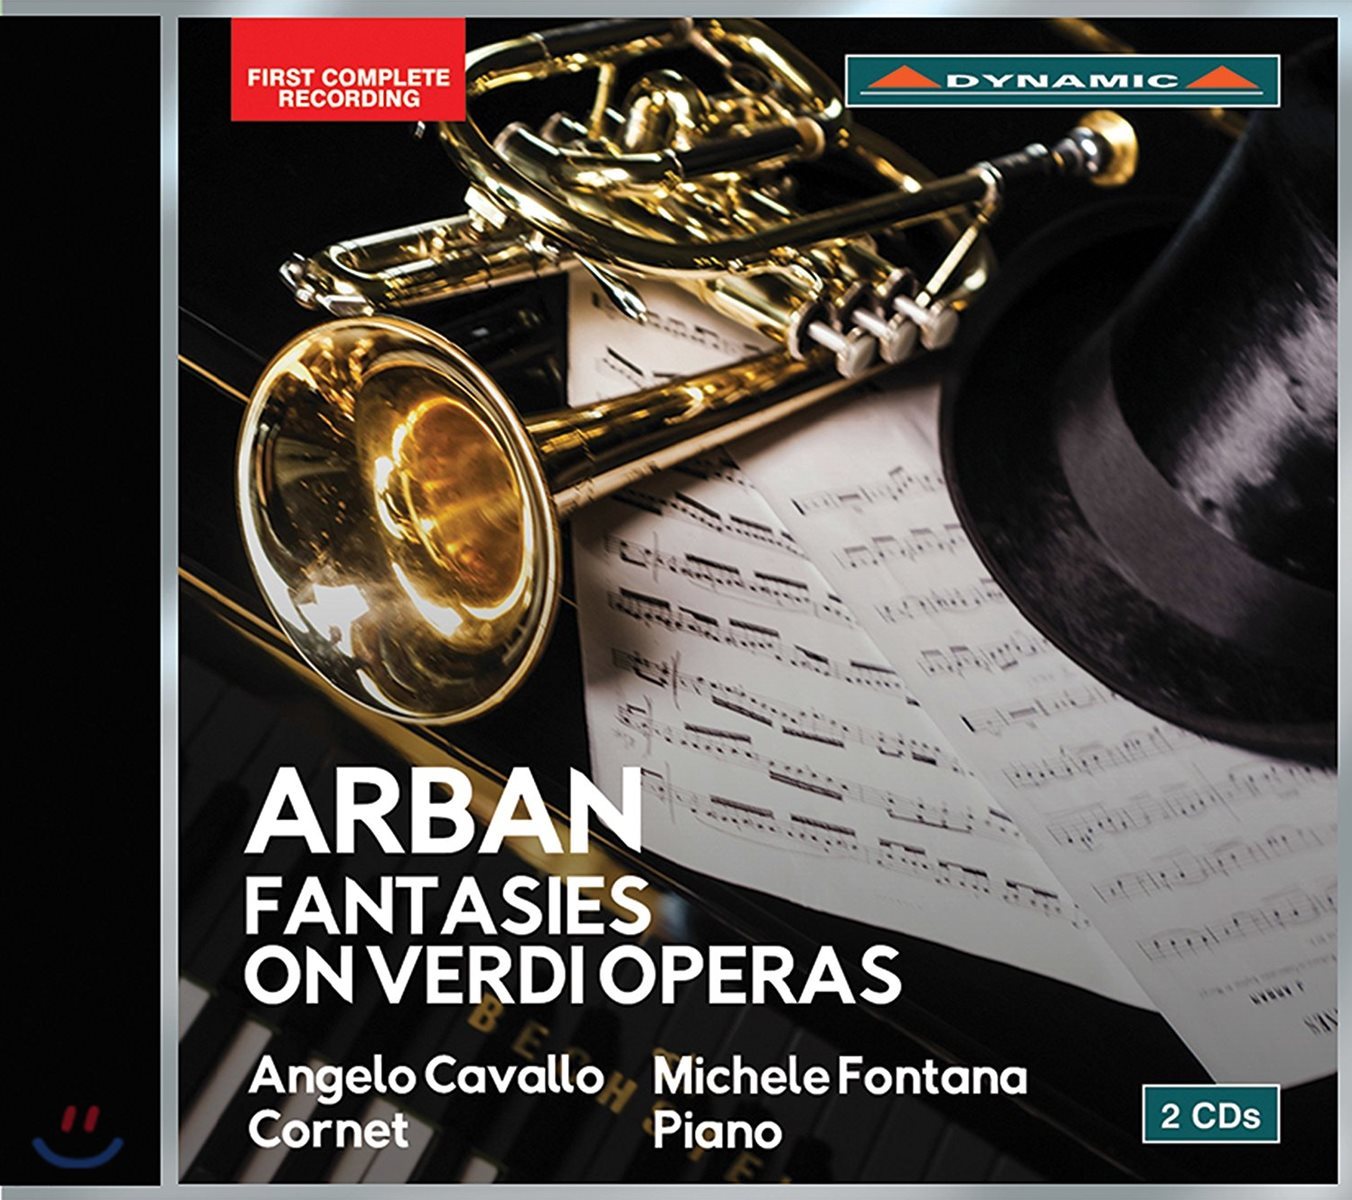 Angelo Cavallo / Michele Fontana 장-밥티스트 아르방: 베르디의 오페라에 의한 환상곡 - 안젤로 카발로, 미켈레 폰타나 (Jean-Baptiste Arban: Fantasies On Verdi Operas)